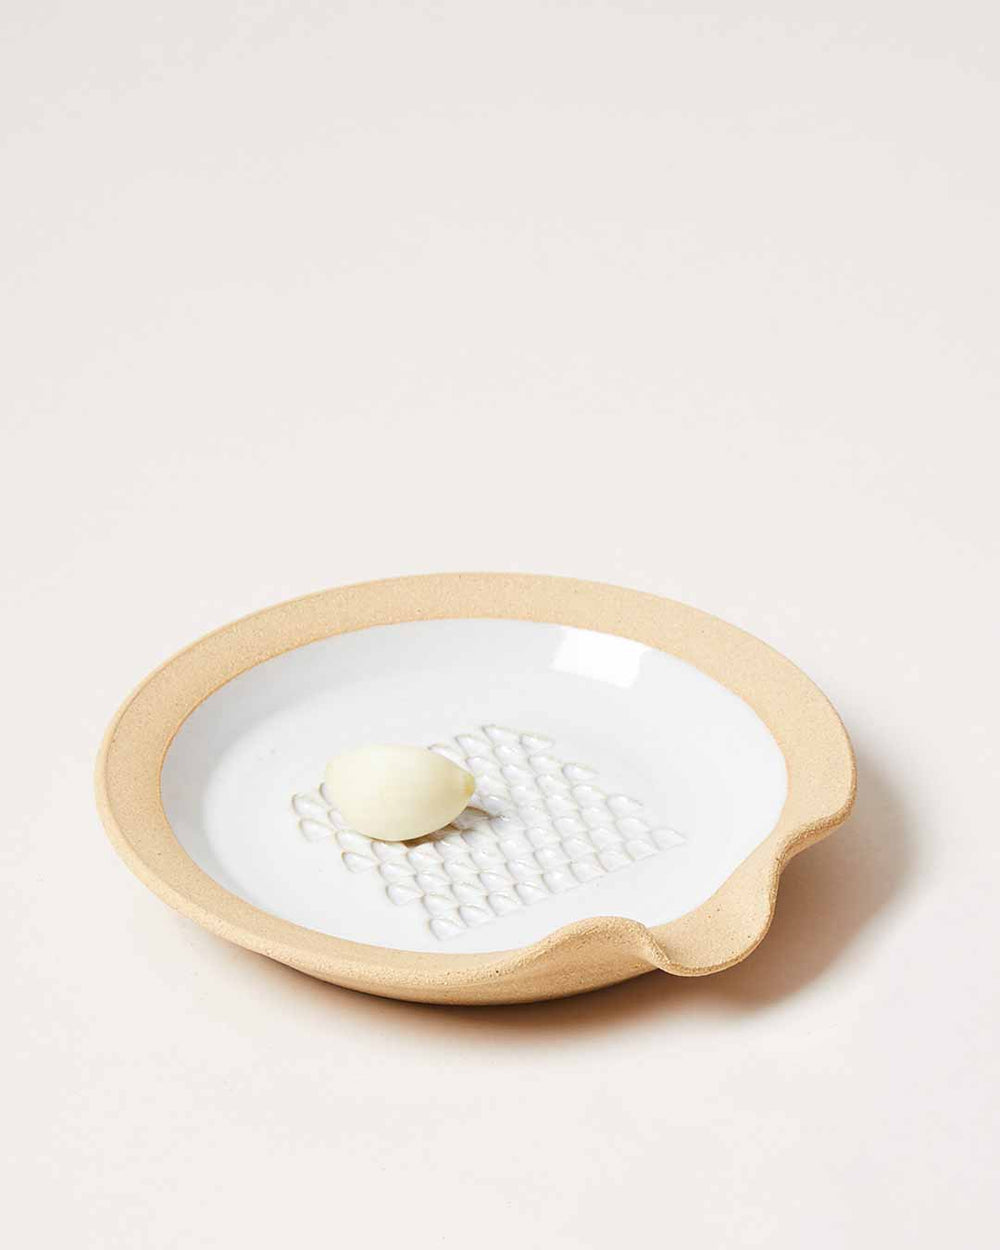 Handmade Pottery Garlic Grater Plate Ceramic Grater Dish Handmade